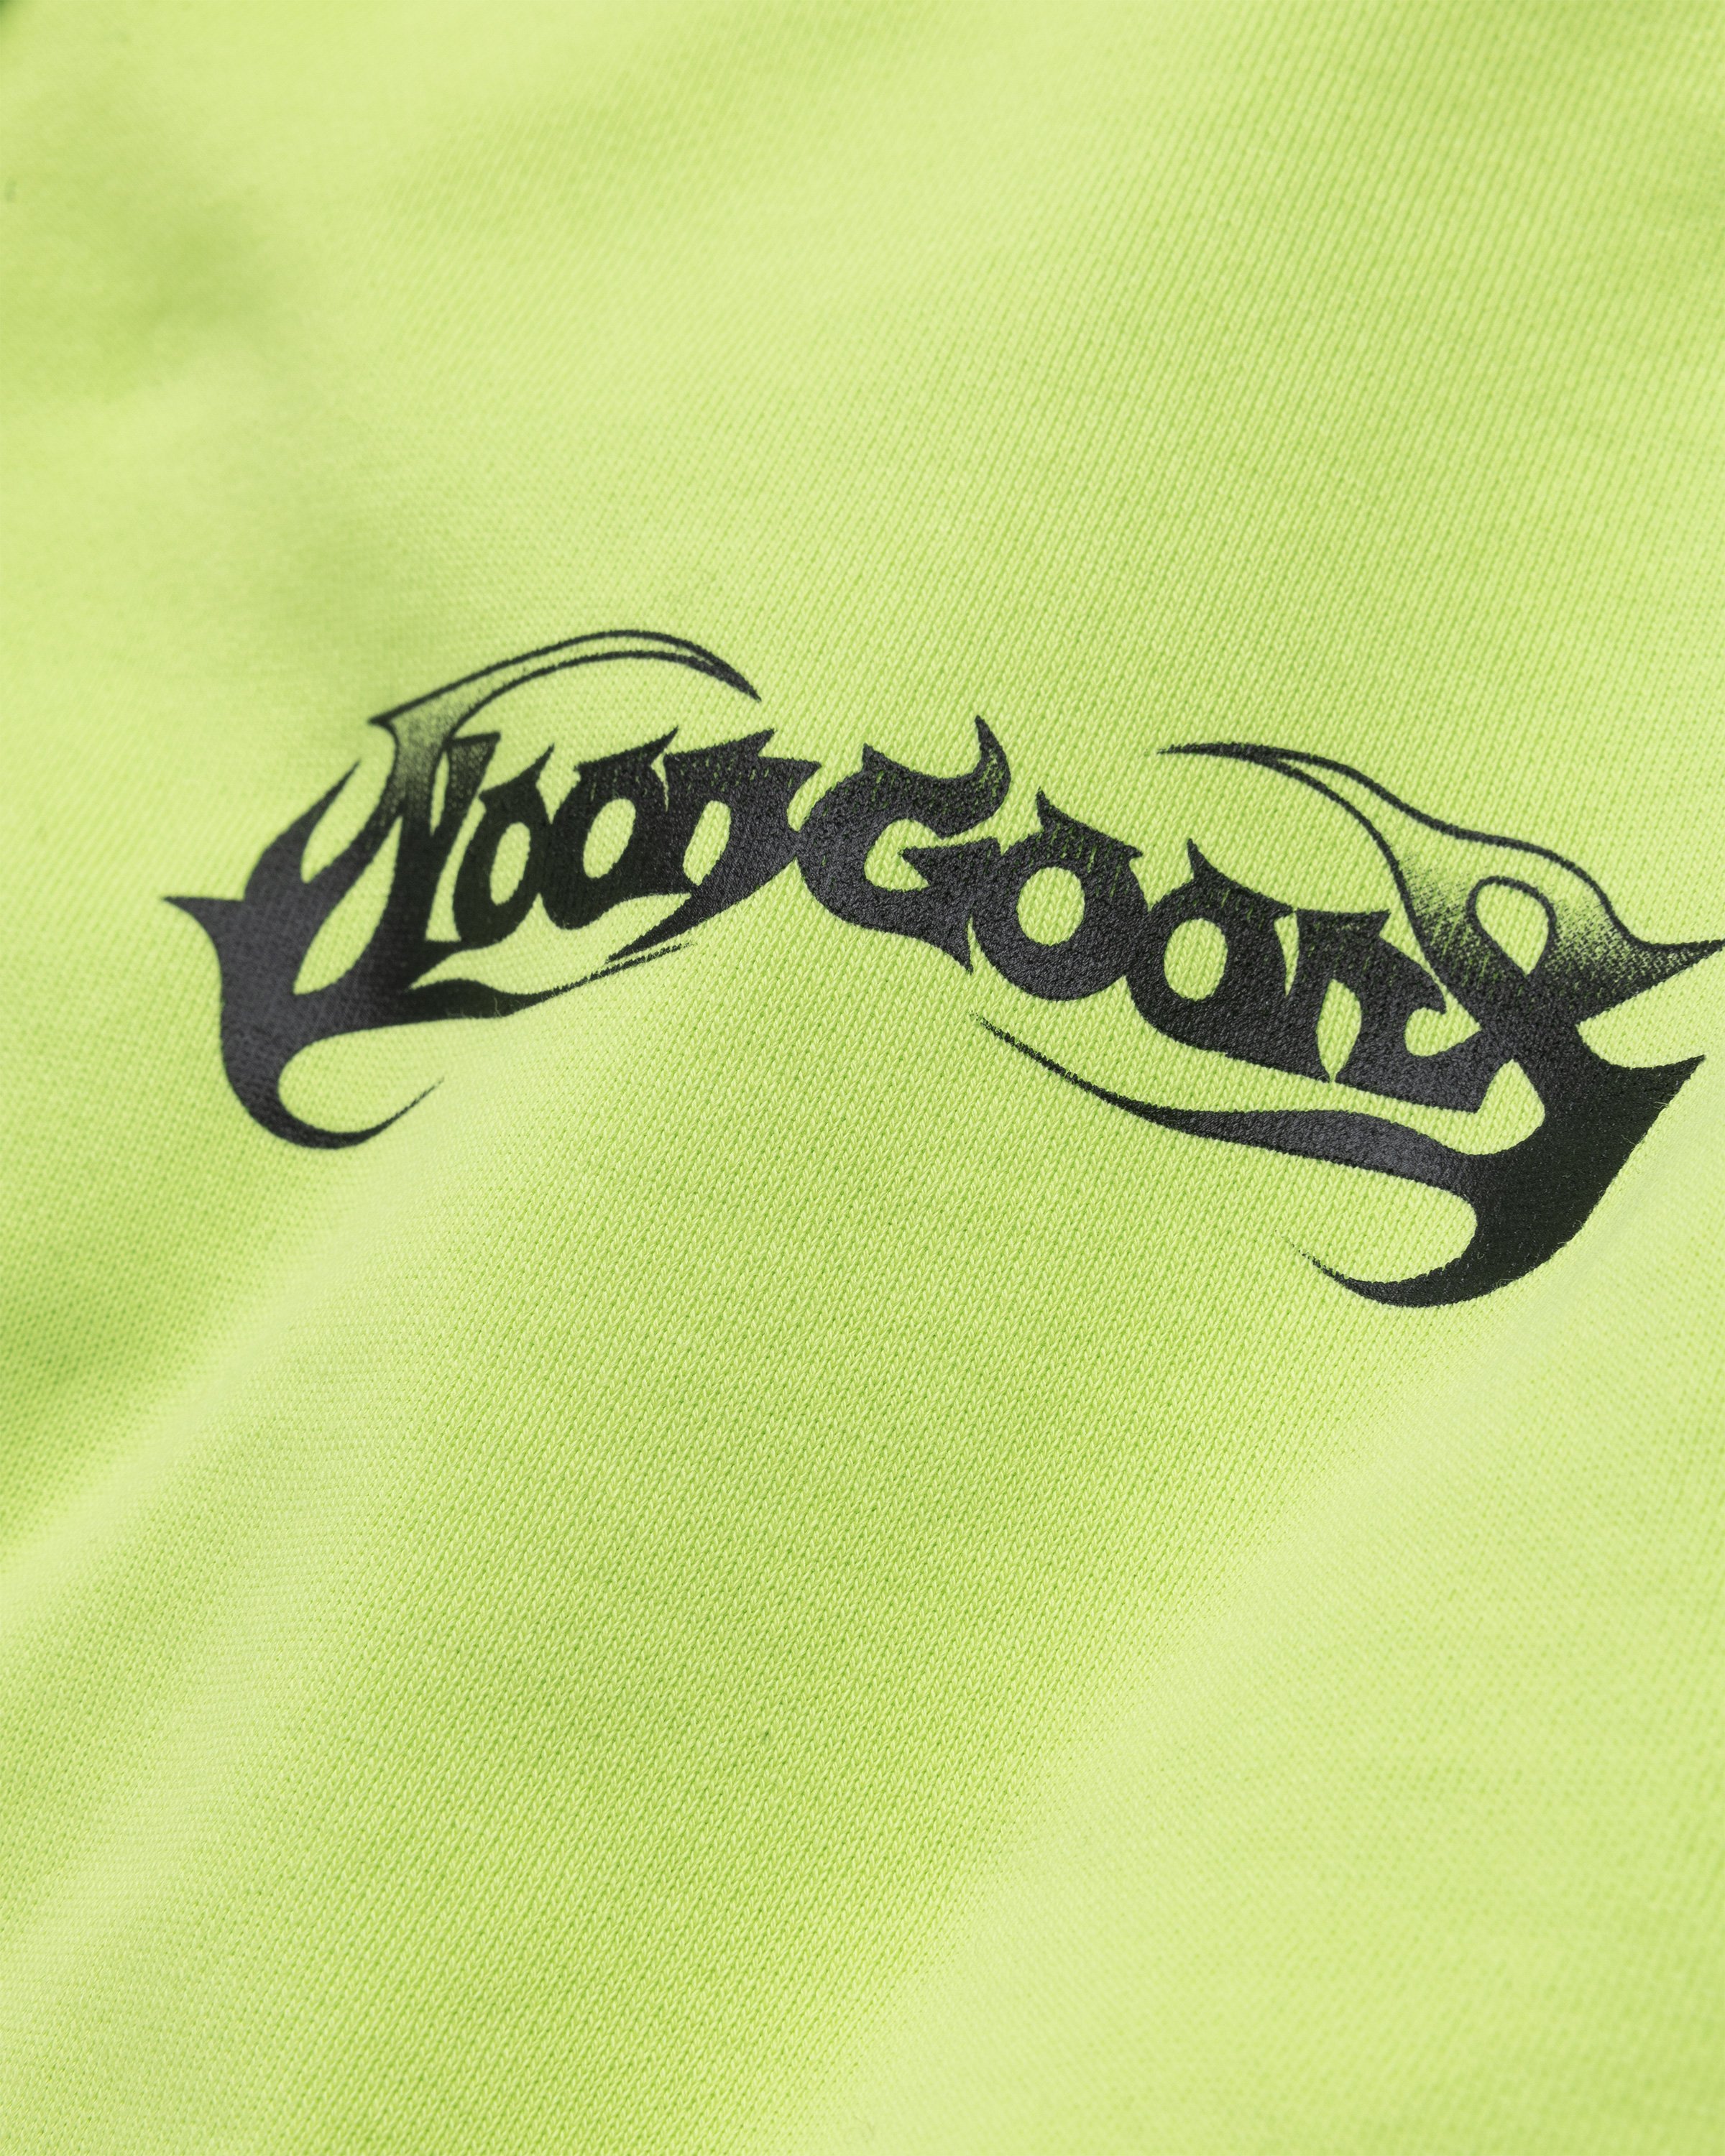 Noon Goons - Kicker Hoodie Green - Clothing - Green - Image 5